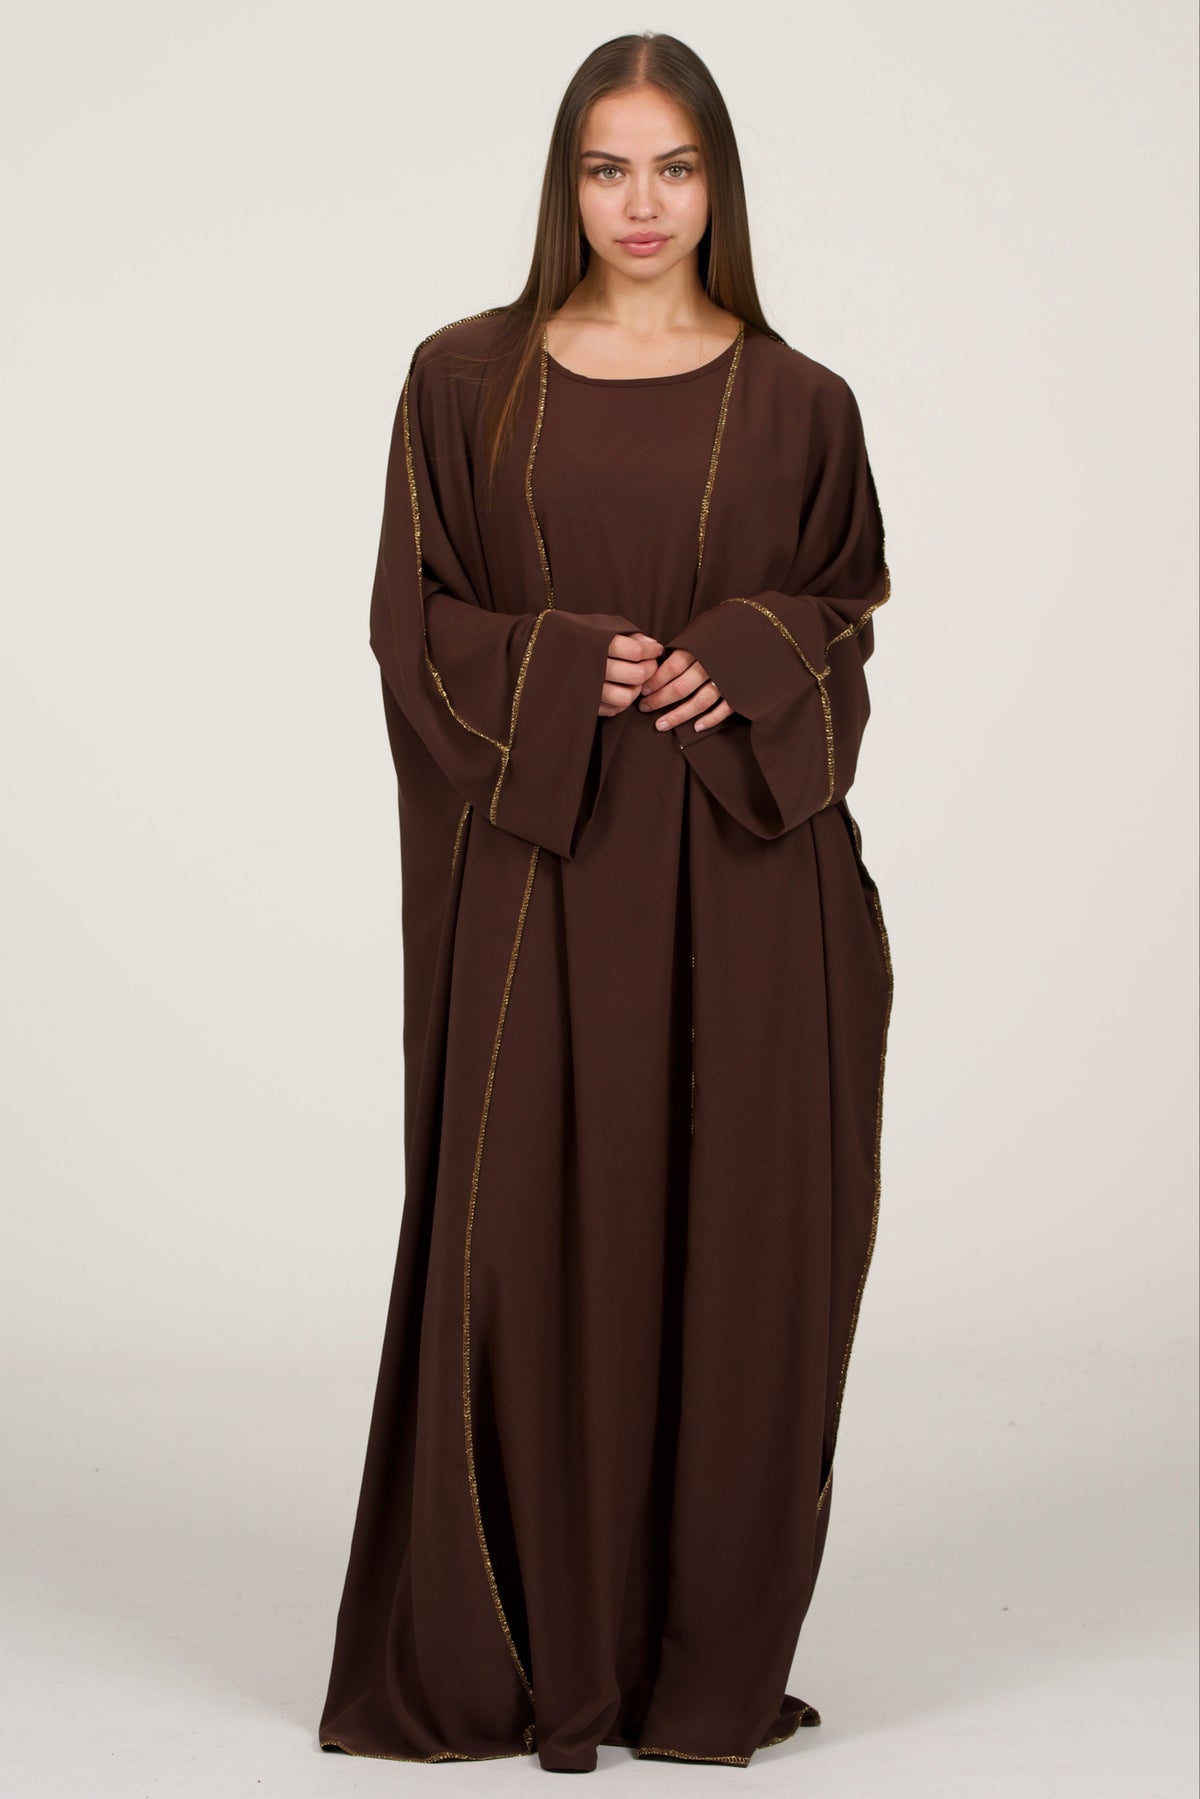 Brown Abaya Set With Golden Details